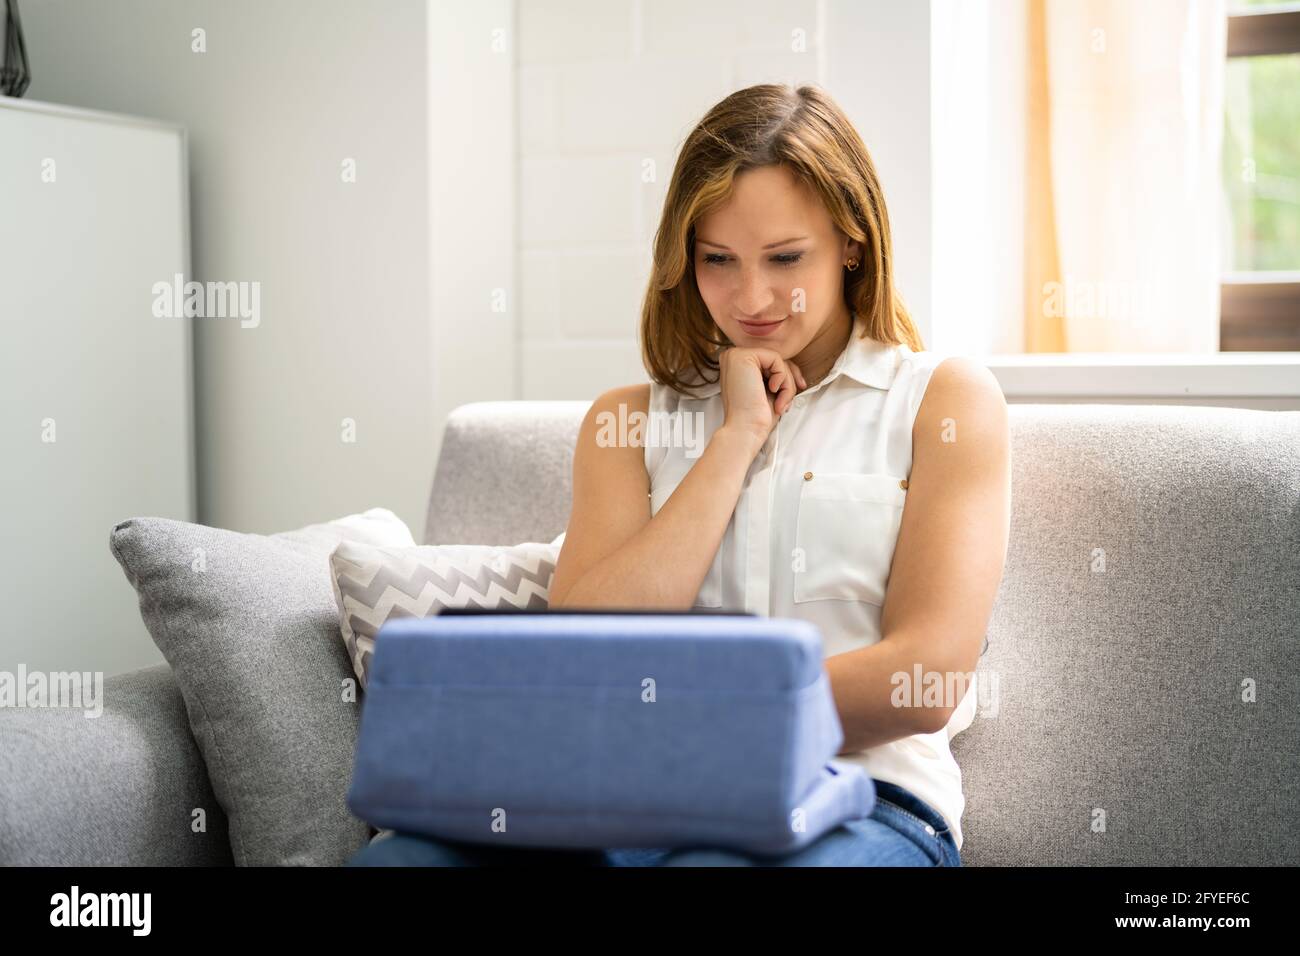 https://c8.alamy.com/comp/2FYEF6C/woman-using-tablet-lap-pillow-to-avoid-neck-pain-2FYEF6C.jpg